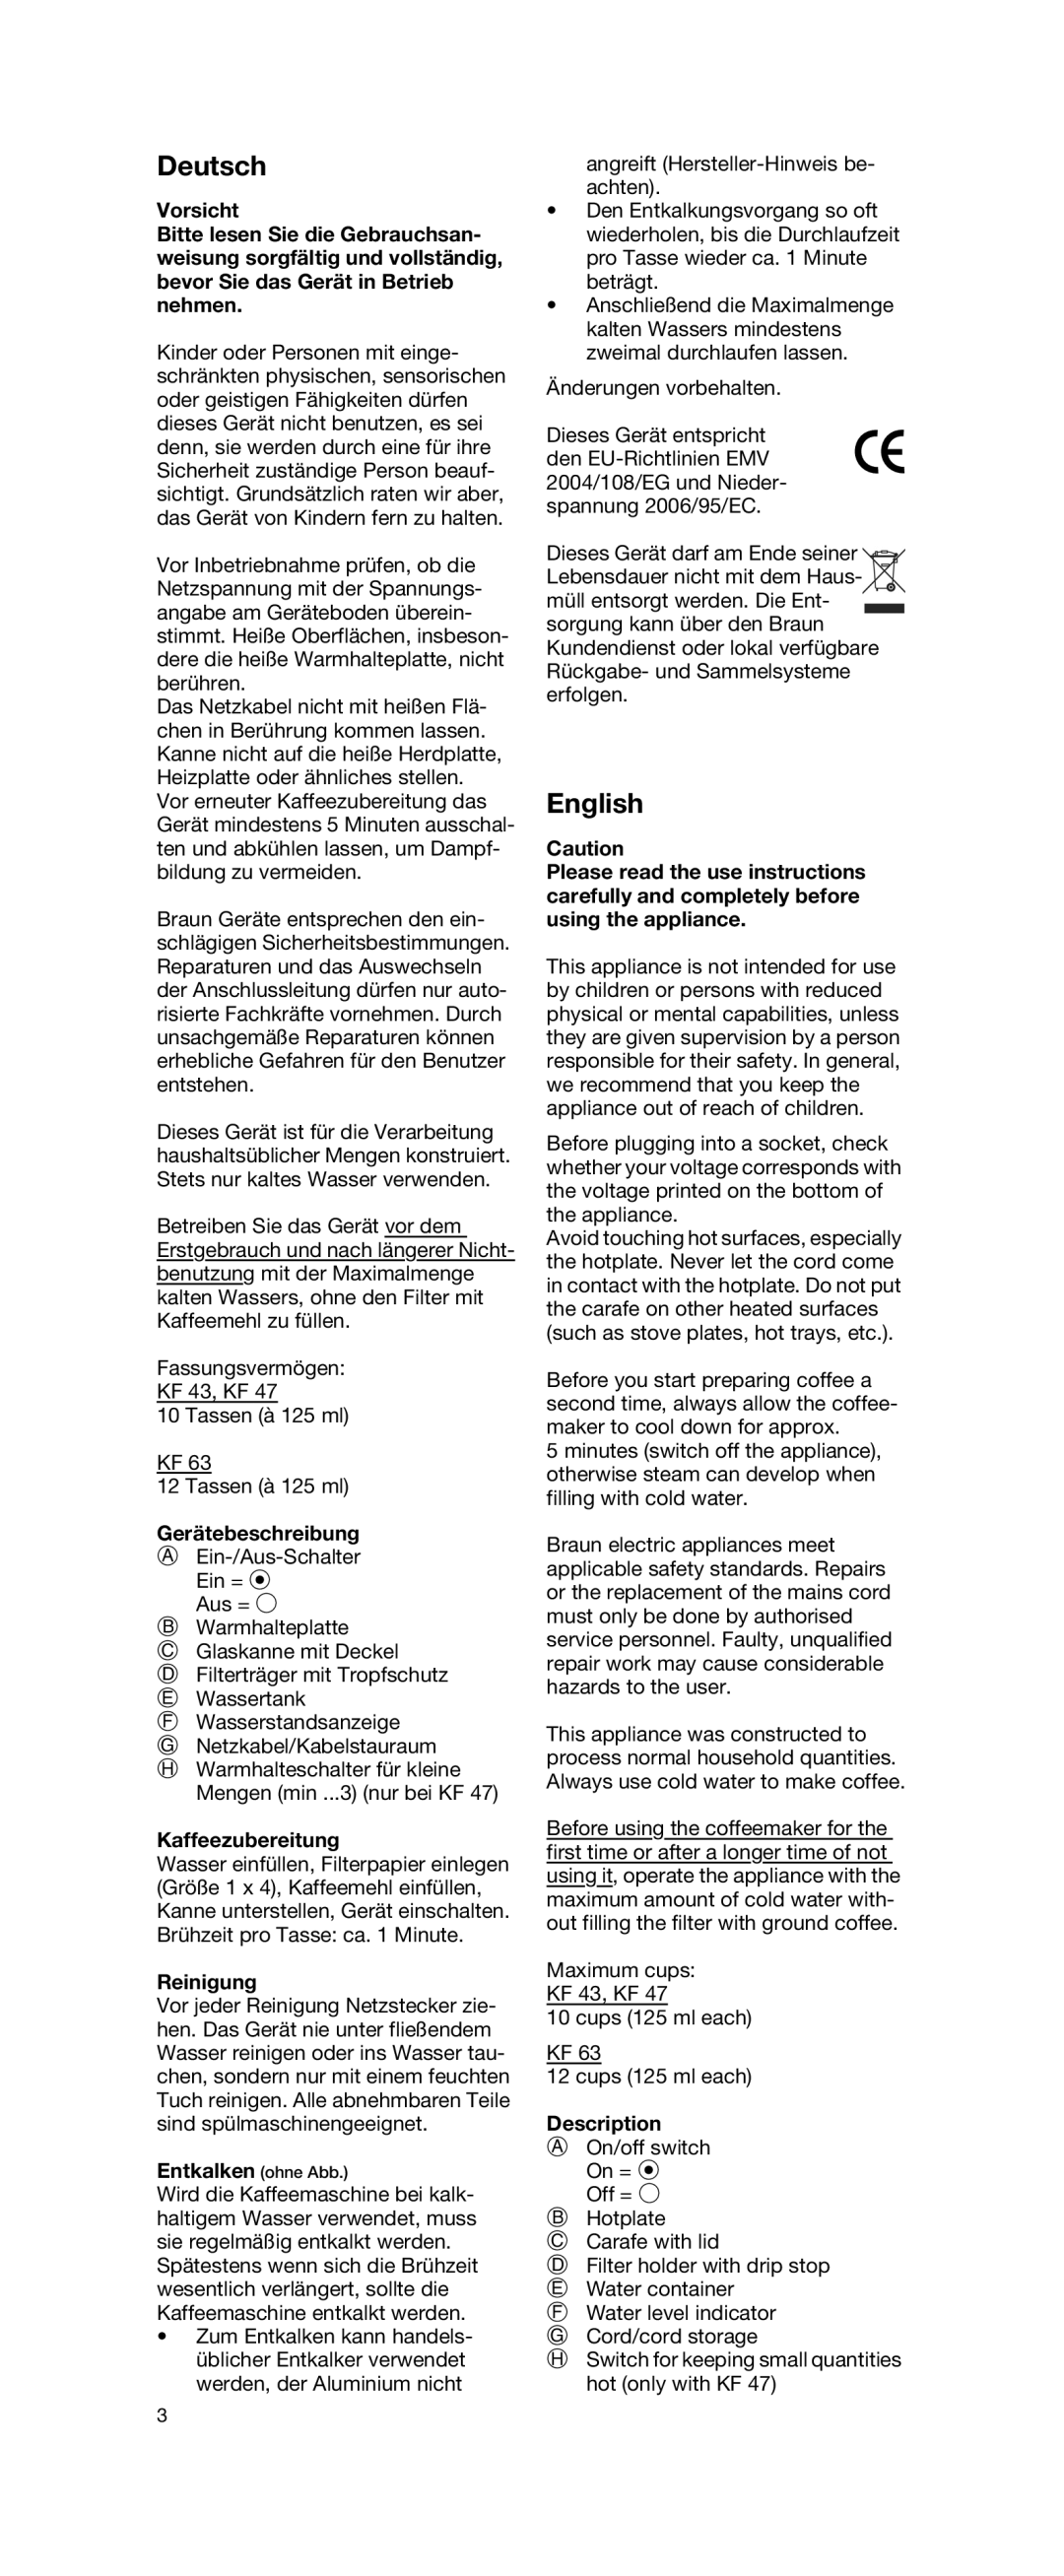 Braun KF 47, KF 43, KF 63 manual Deutsch, English, Vorsicht, Gerätebeschreibung, Kaffeezubereitung, Reinigung, Description 